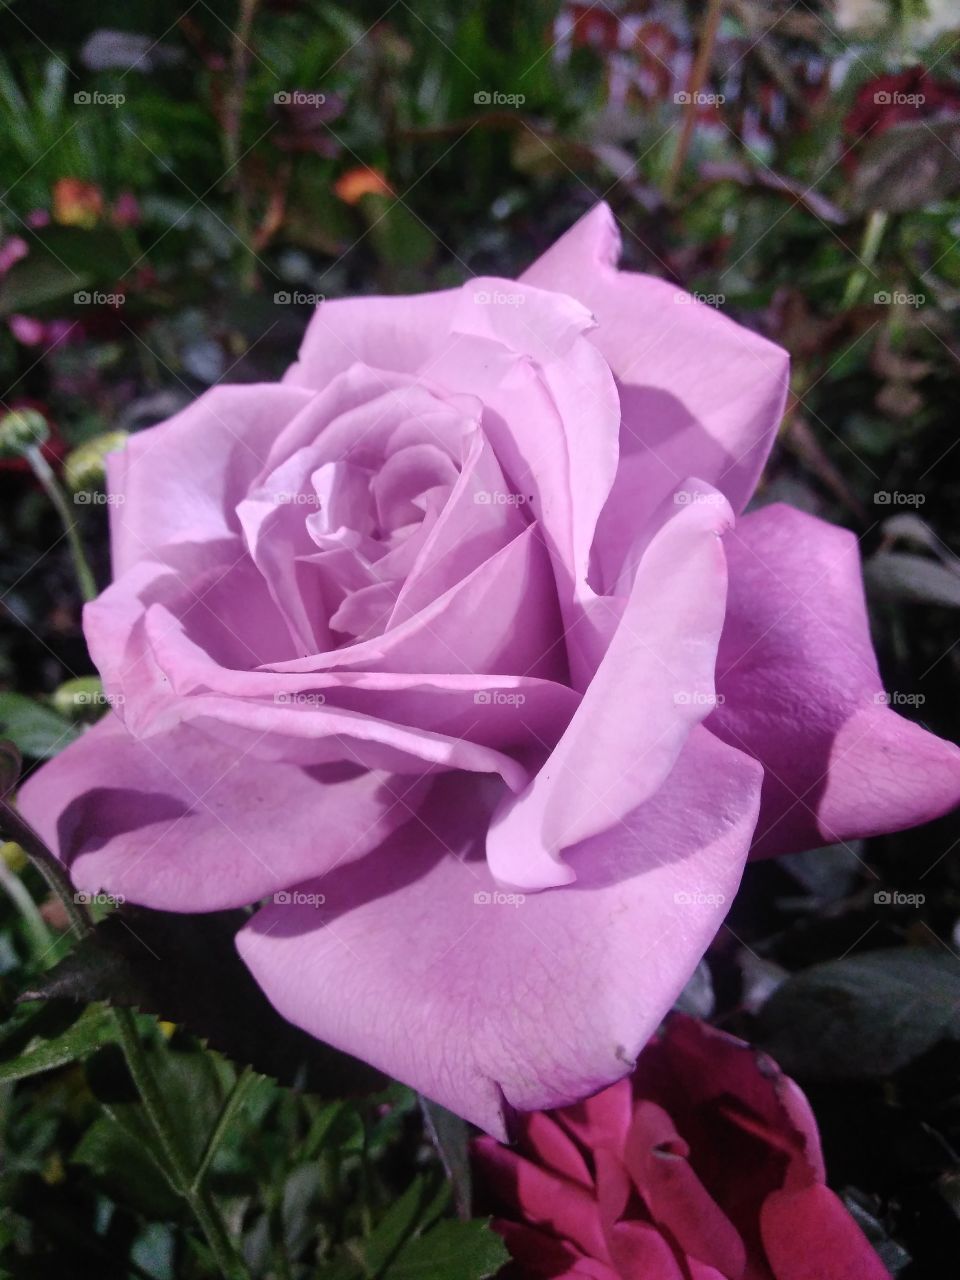 pink Rose
beauty
symbol of friendship